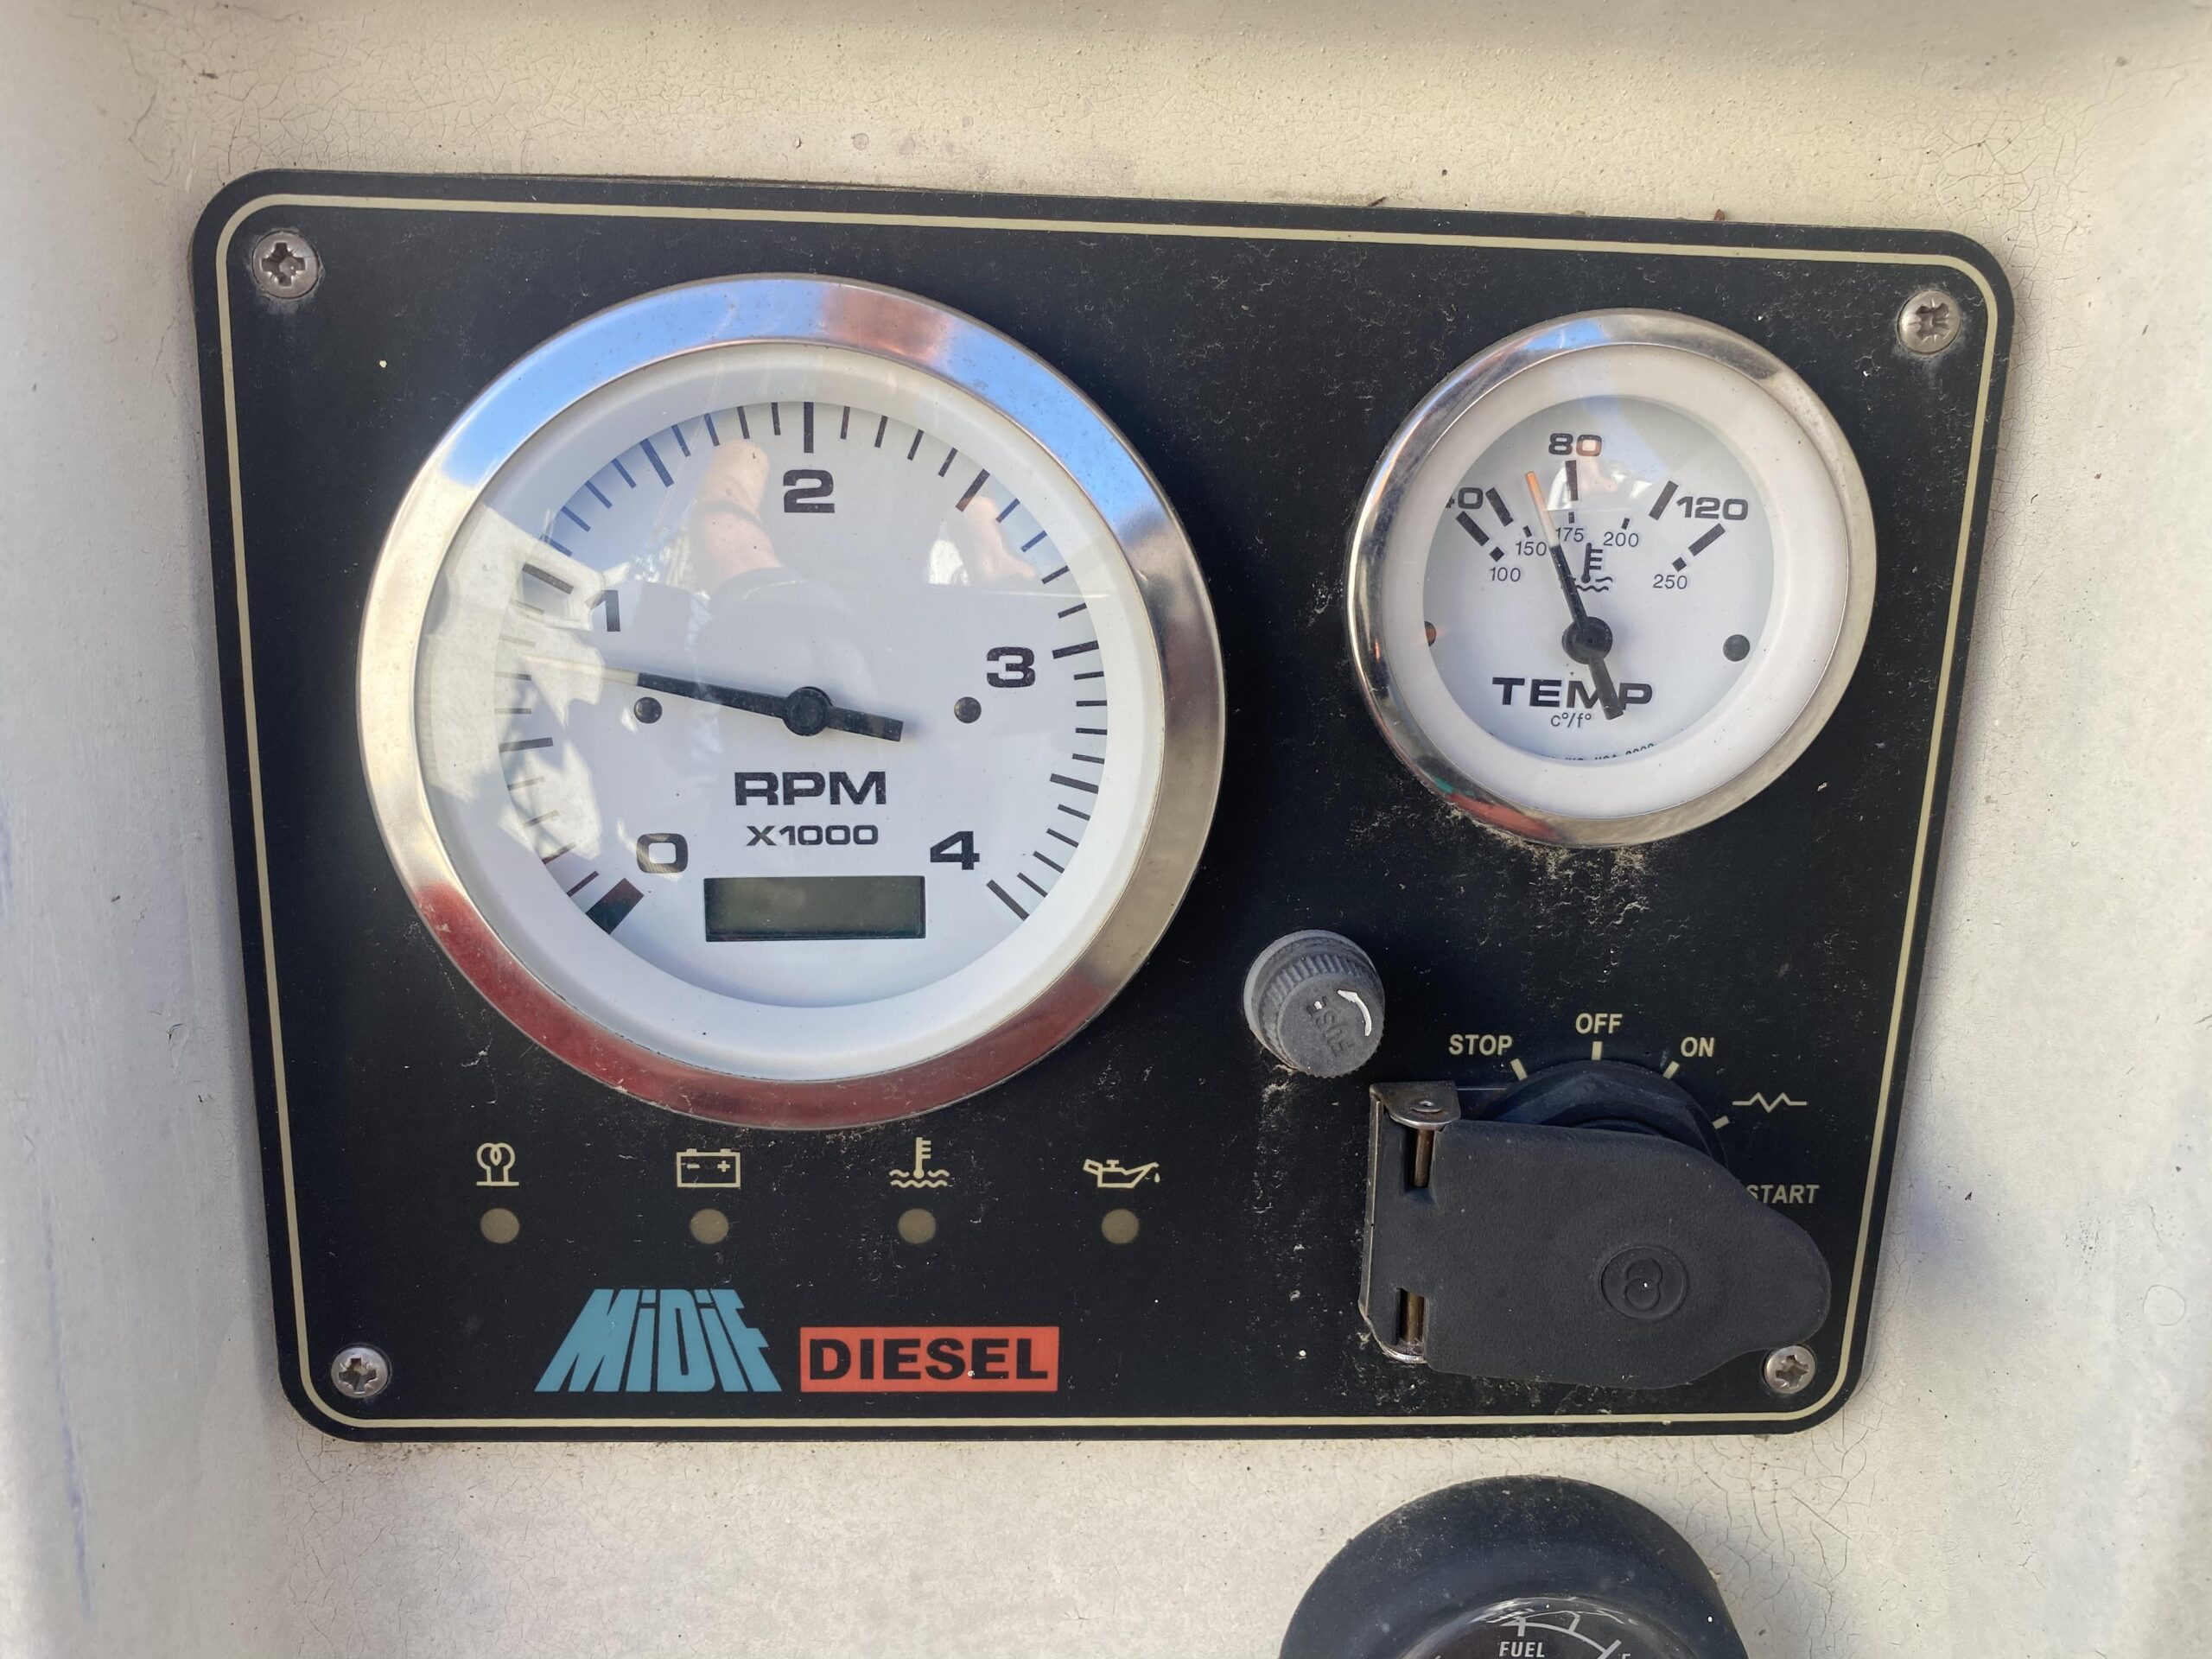 Midif MD 960 diesel